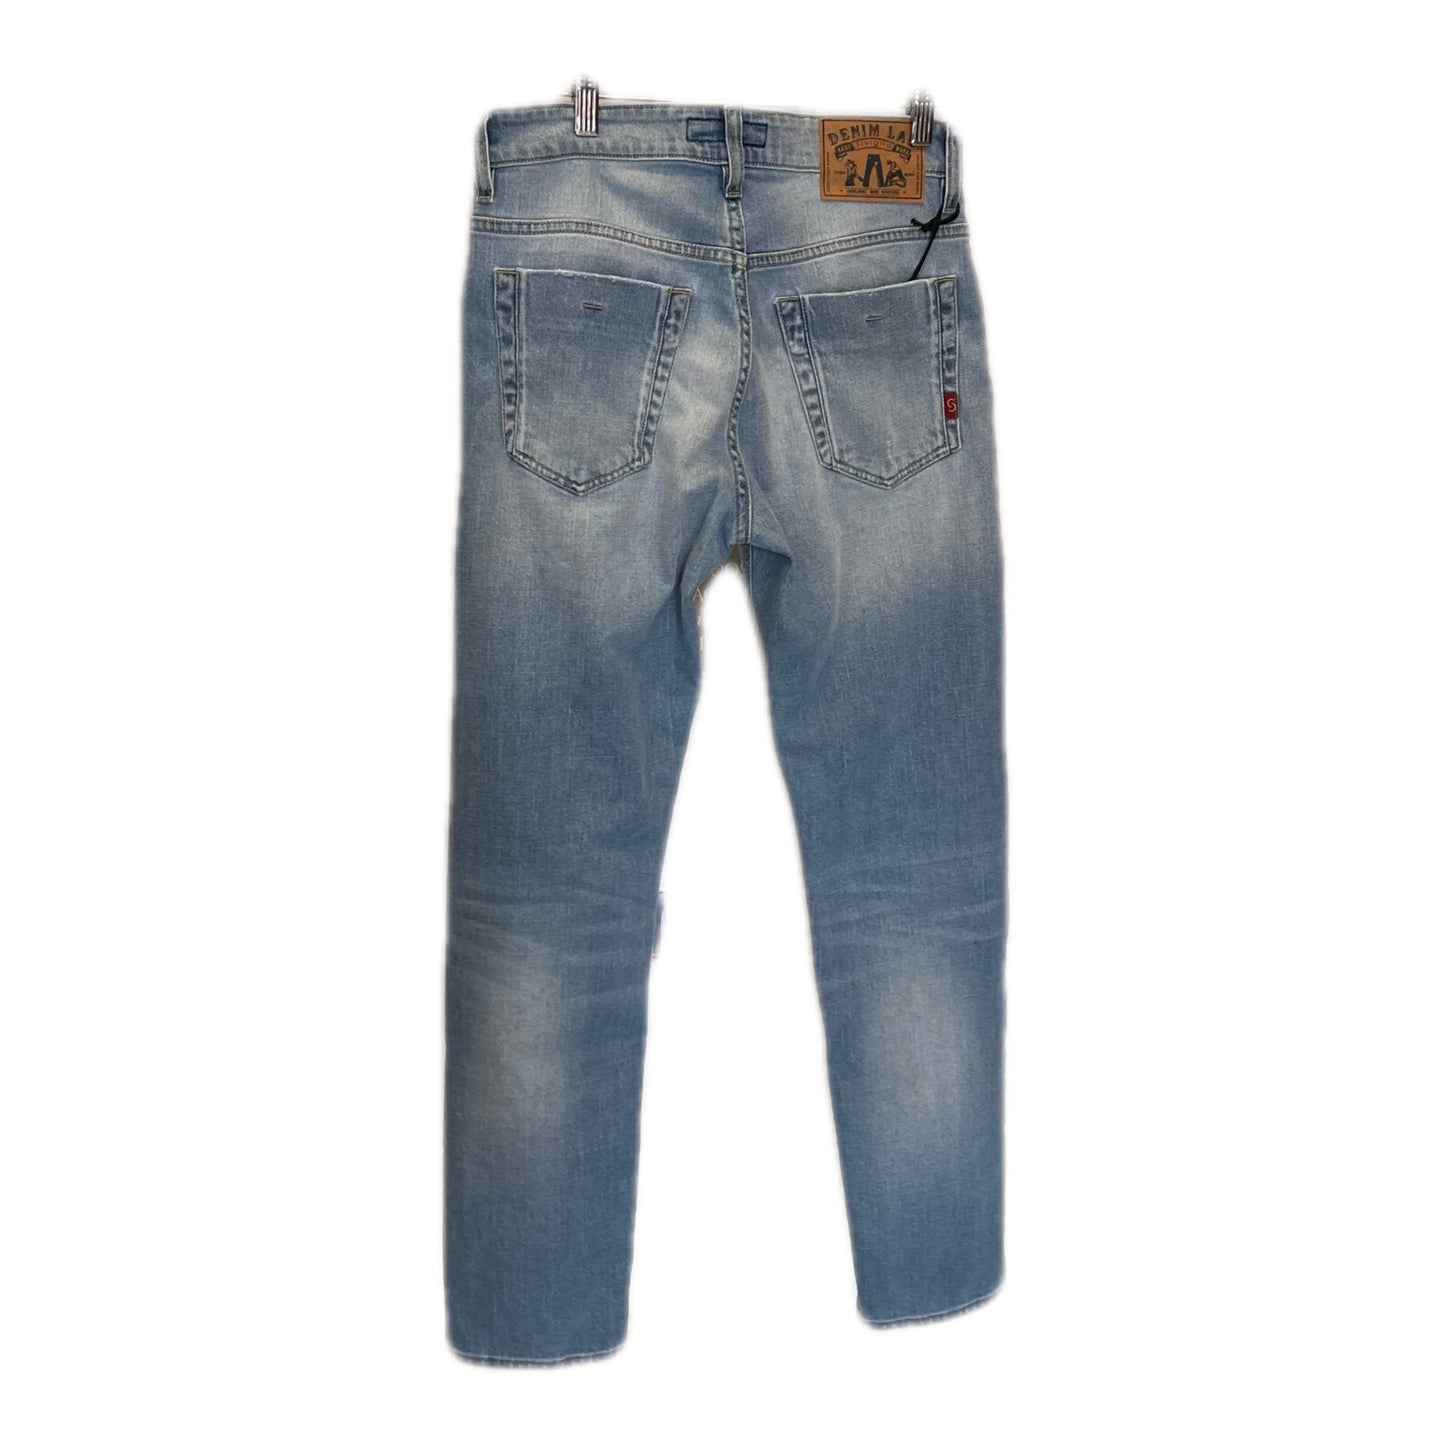 Siviglia - Jeans 5 Pockets Tapared Fit